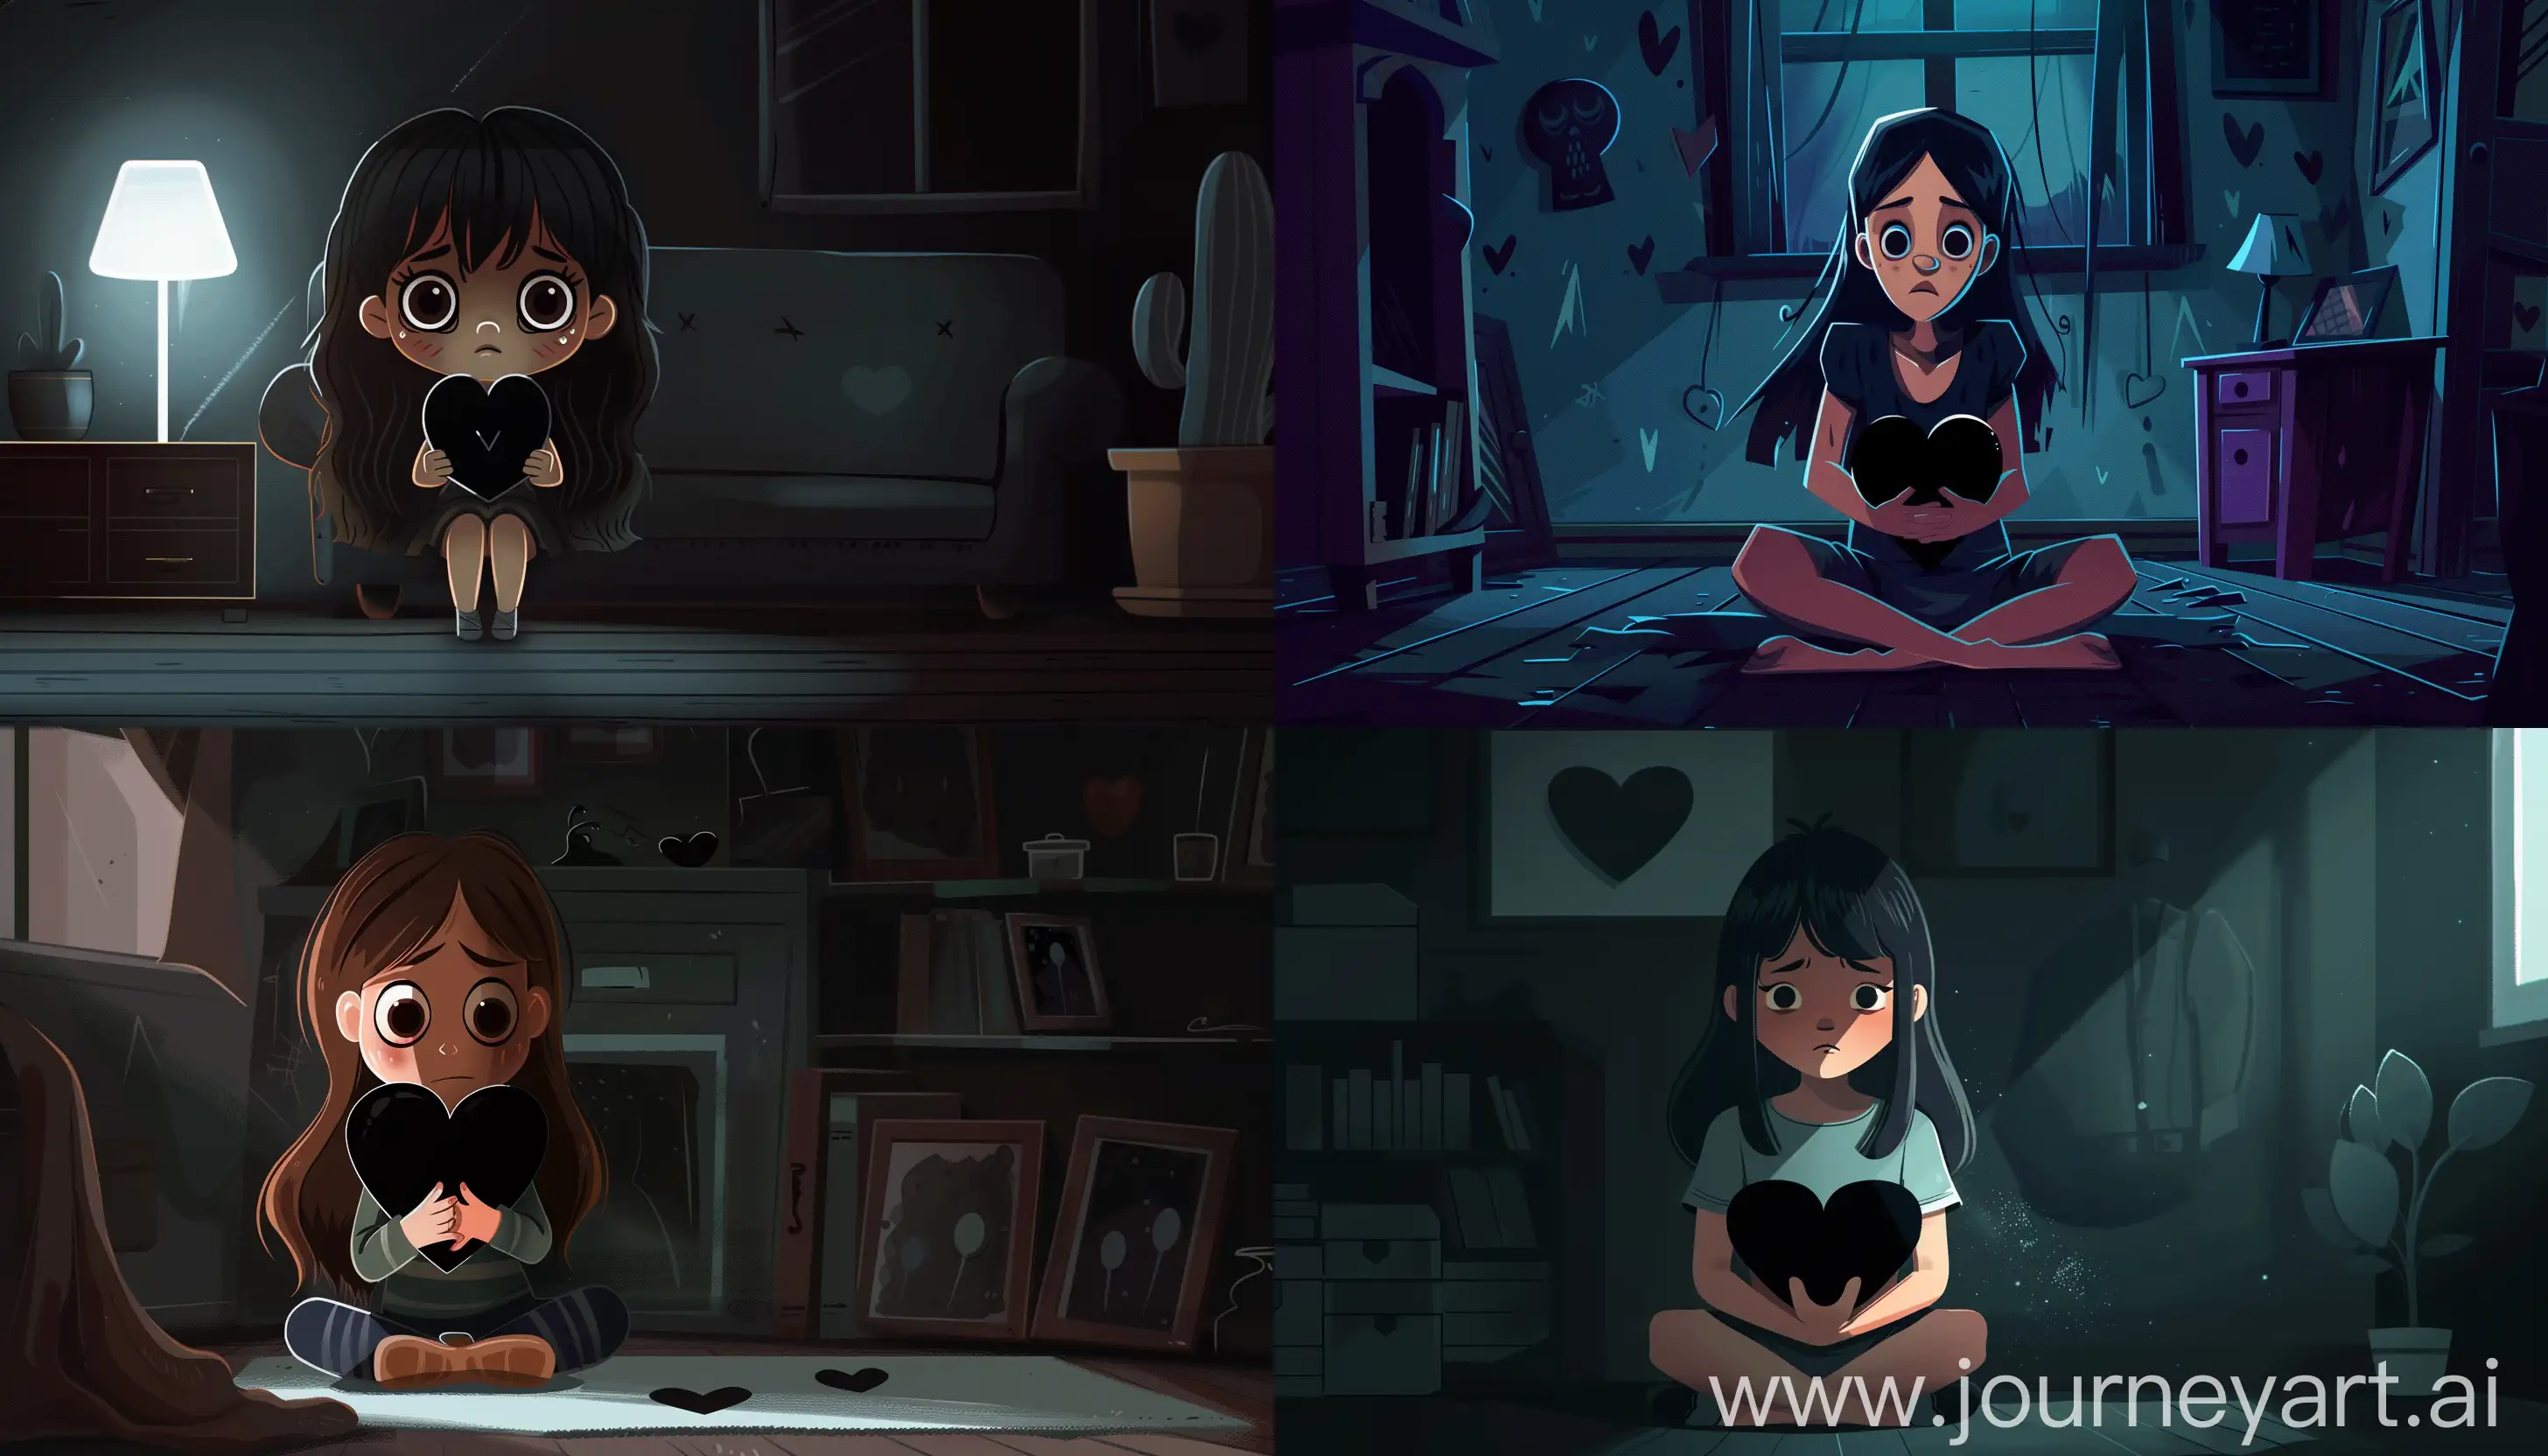 Dark-Cartoon-Horror-Sad-Girl-with-Black-Heart-in-Dimly-Lit-Room